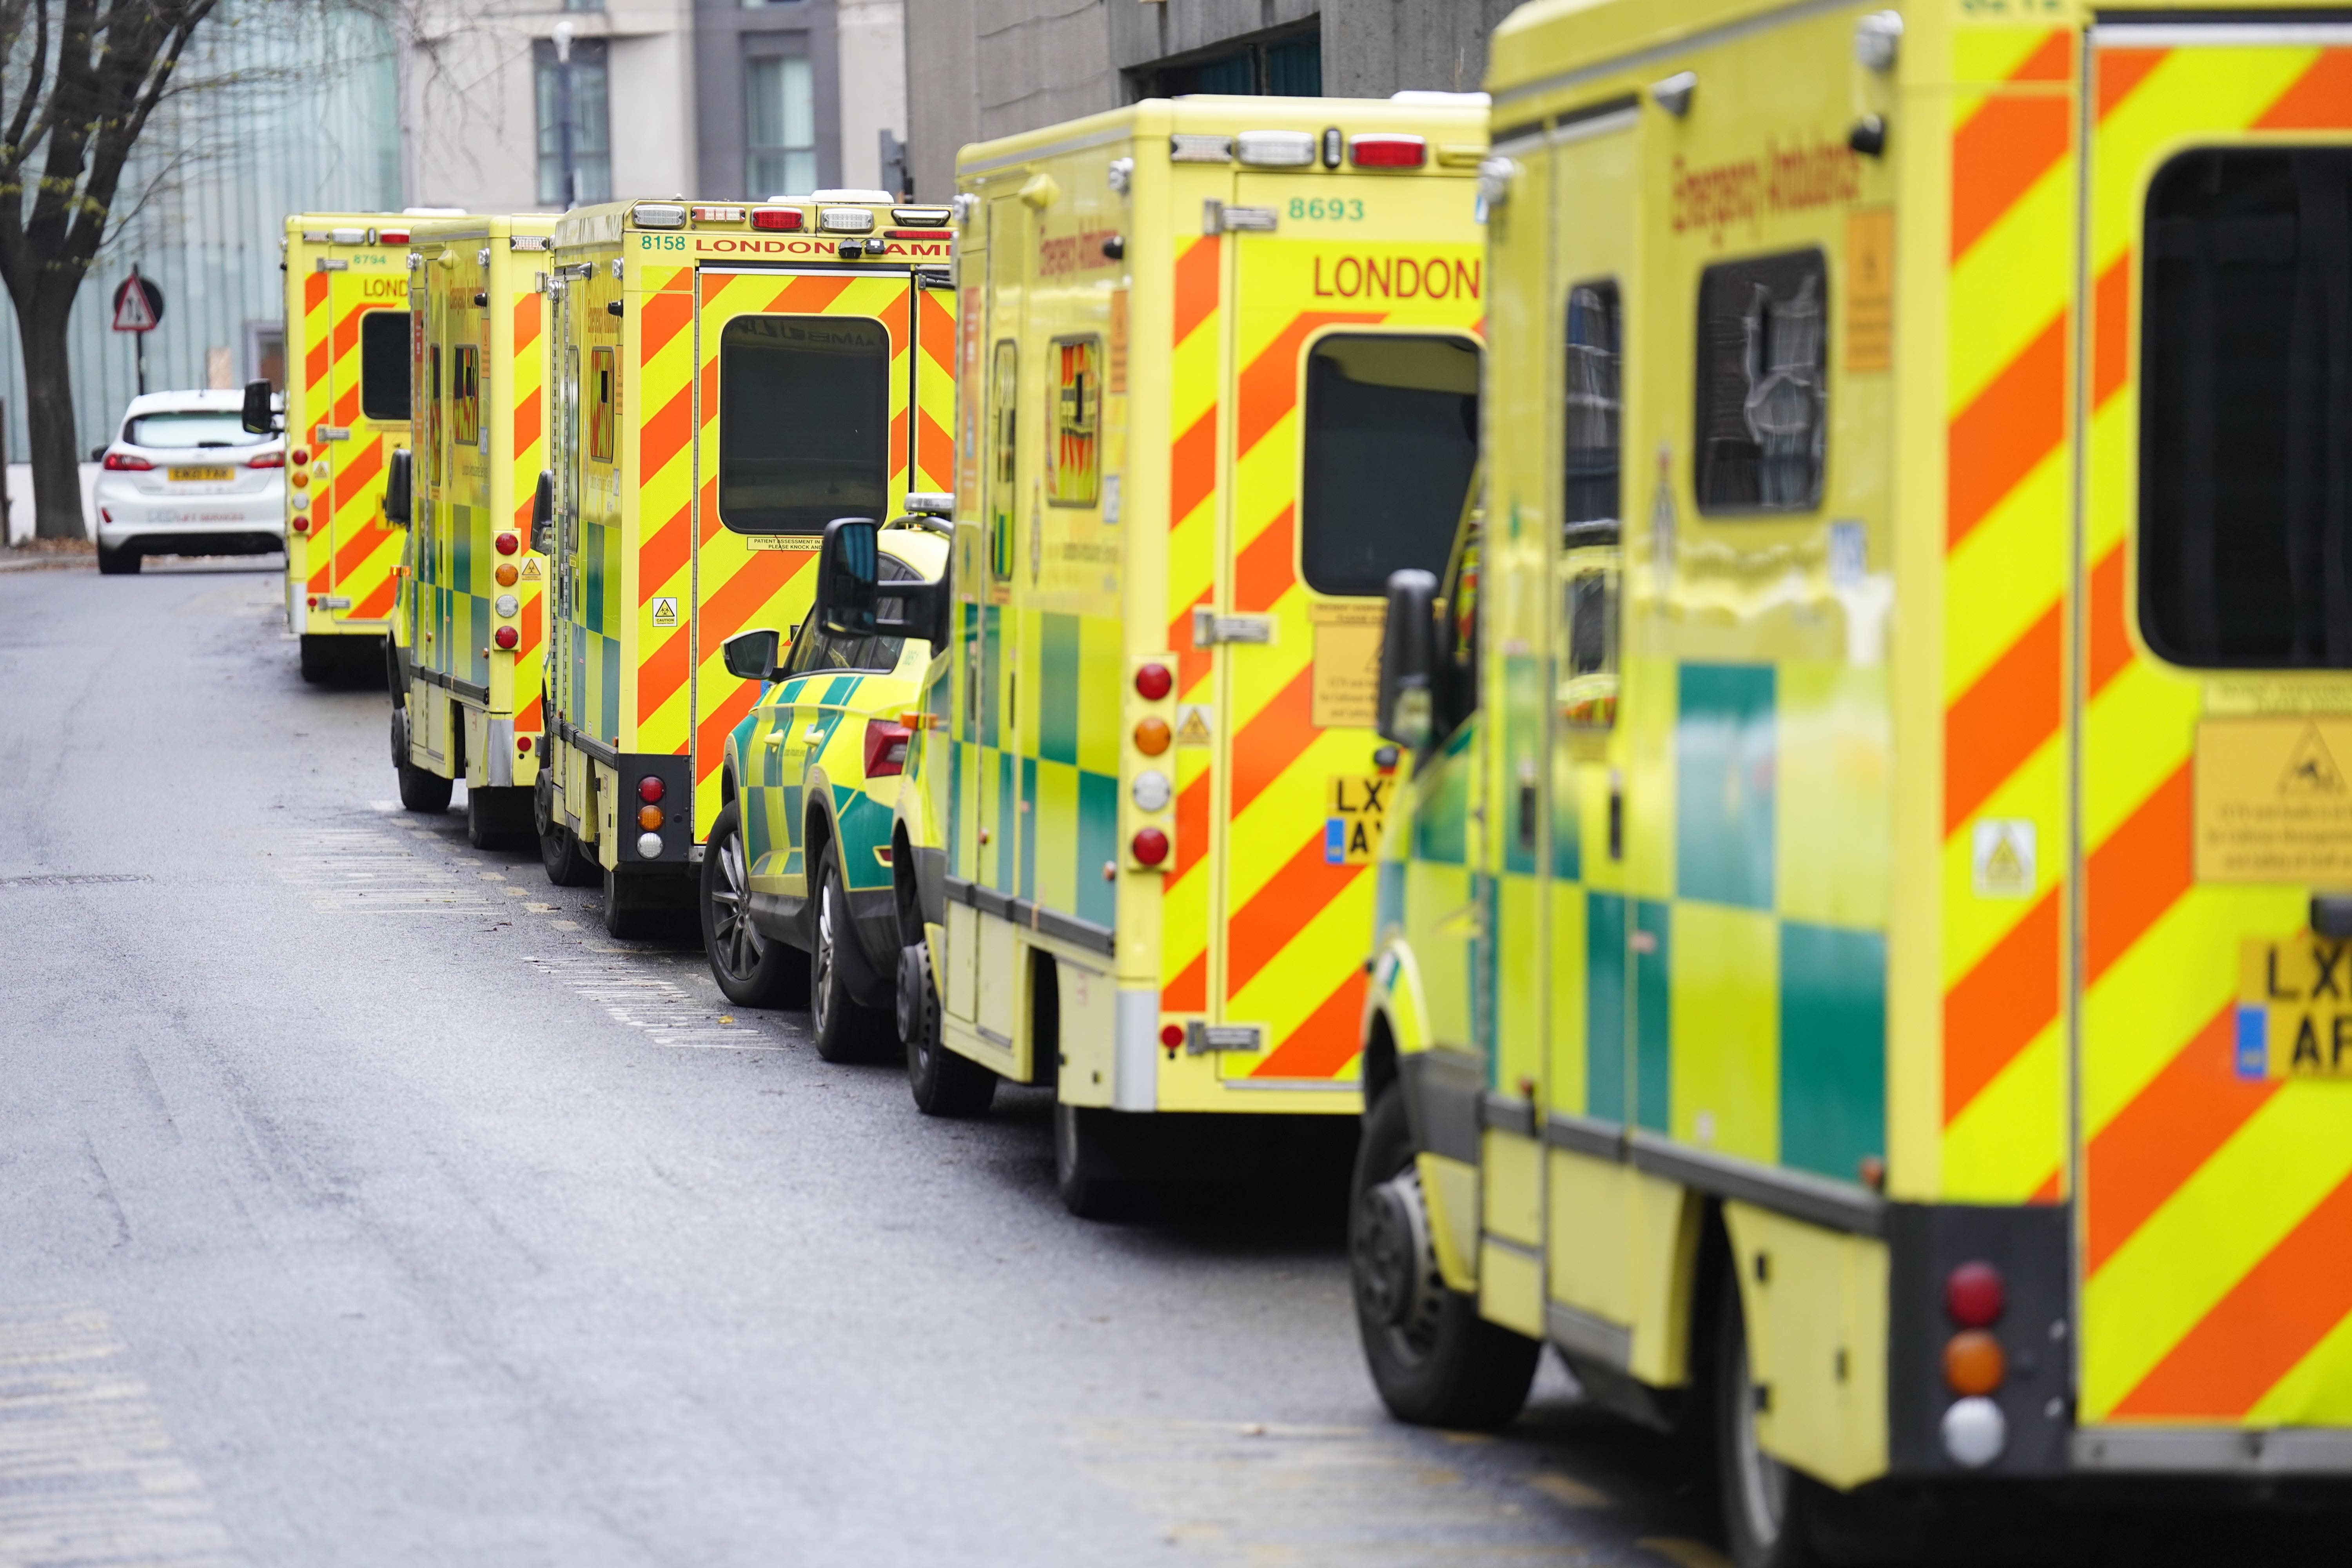 On 6 February more than 10,000 ambulance staff are set to walk out alongside nurses